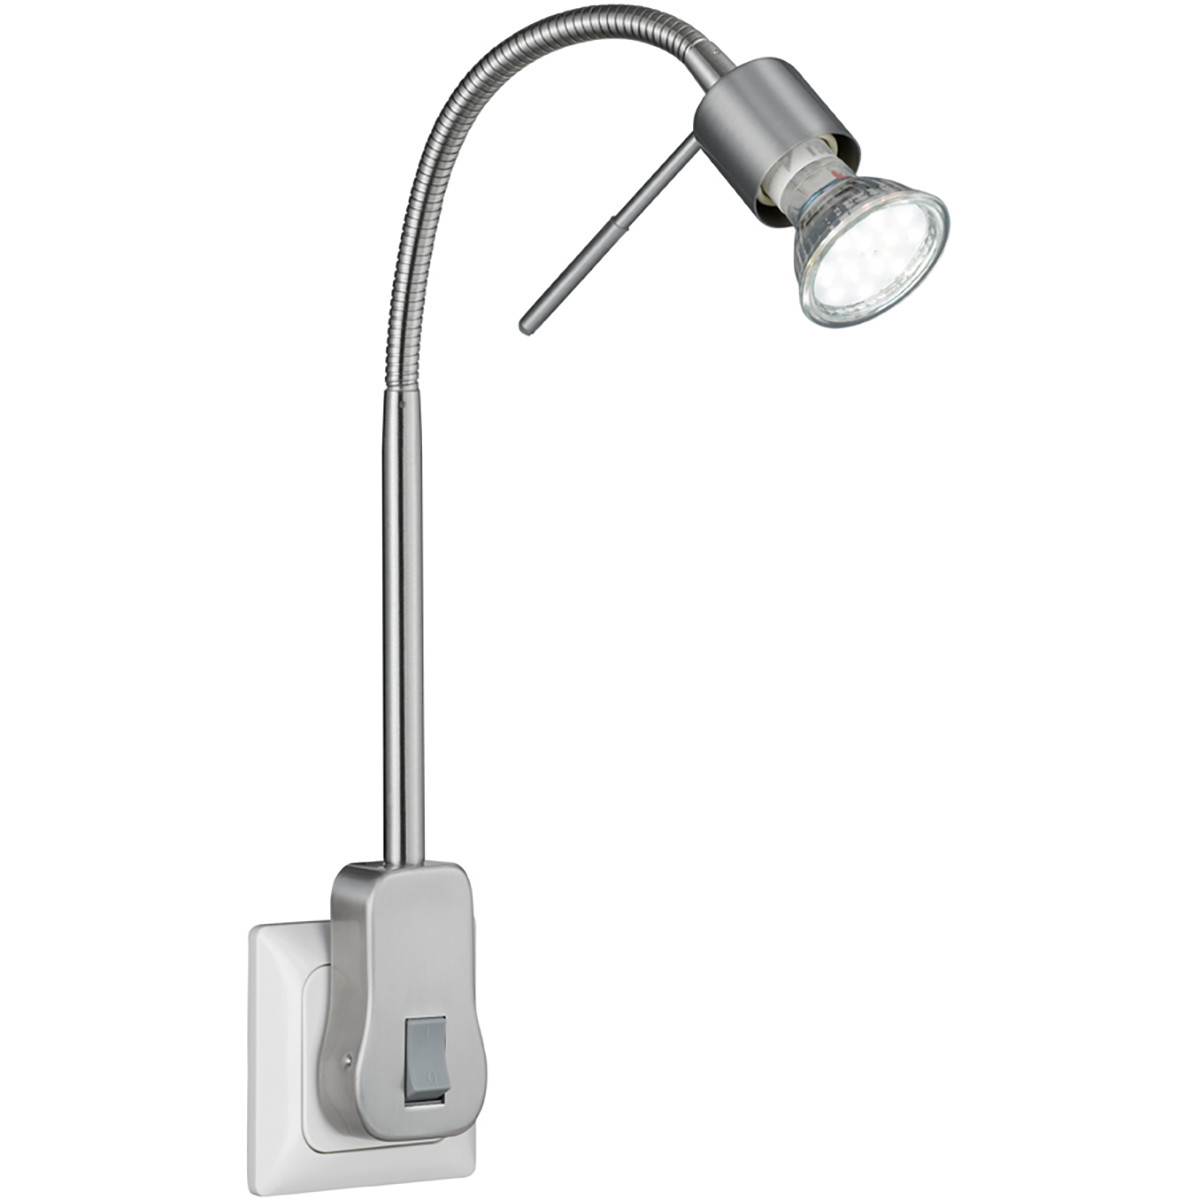 Stekkerlamp met Schakelaar - Trion Loany - GU10 Fitting - 5W - Warm Wit 3000K - Dimbaar - Mat Nikkel